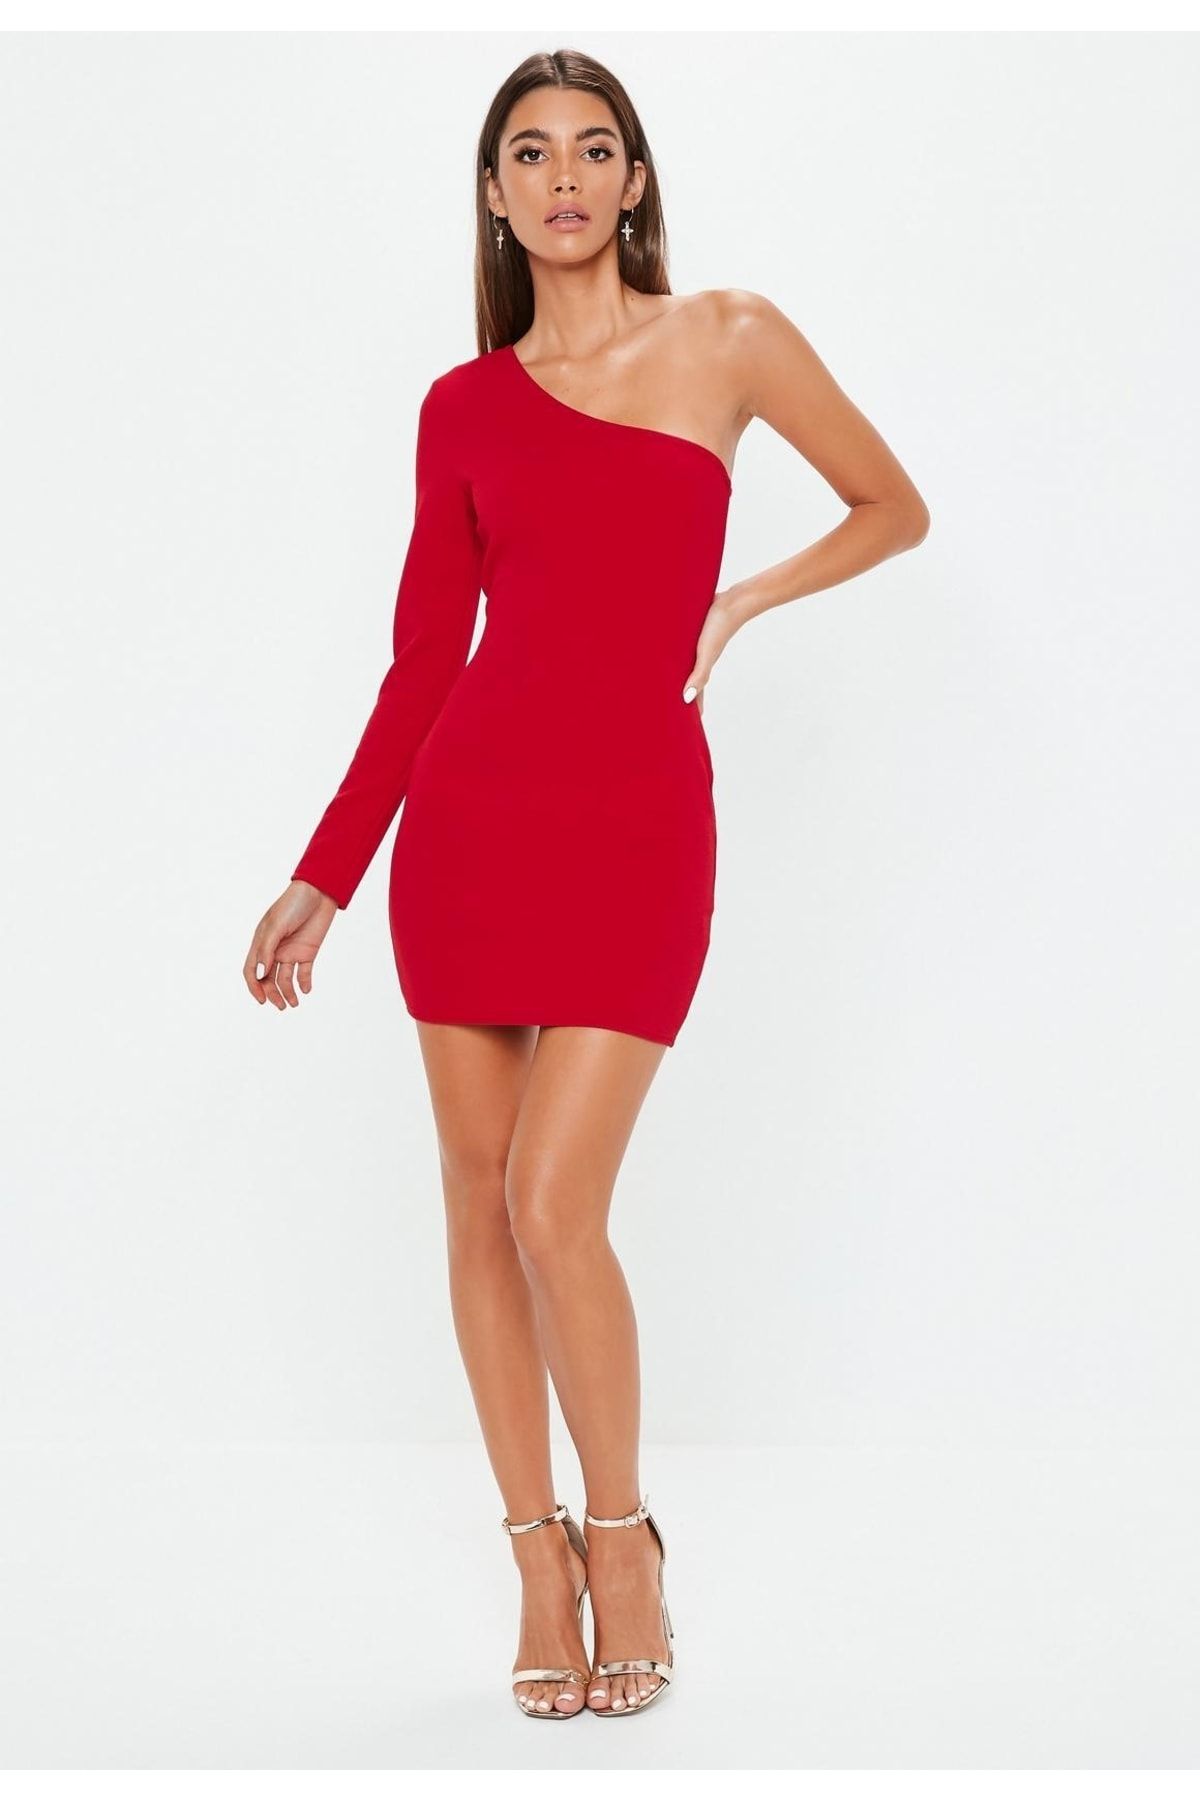 Secret Passion Lingerie Tknfashıon Esnek Dalgıç Kumaş Tek Kol Detaylı Kırmızı Mini Elbise 443